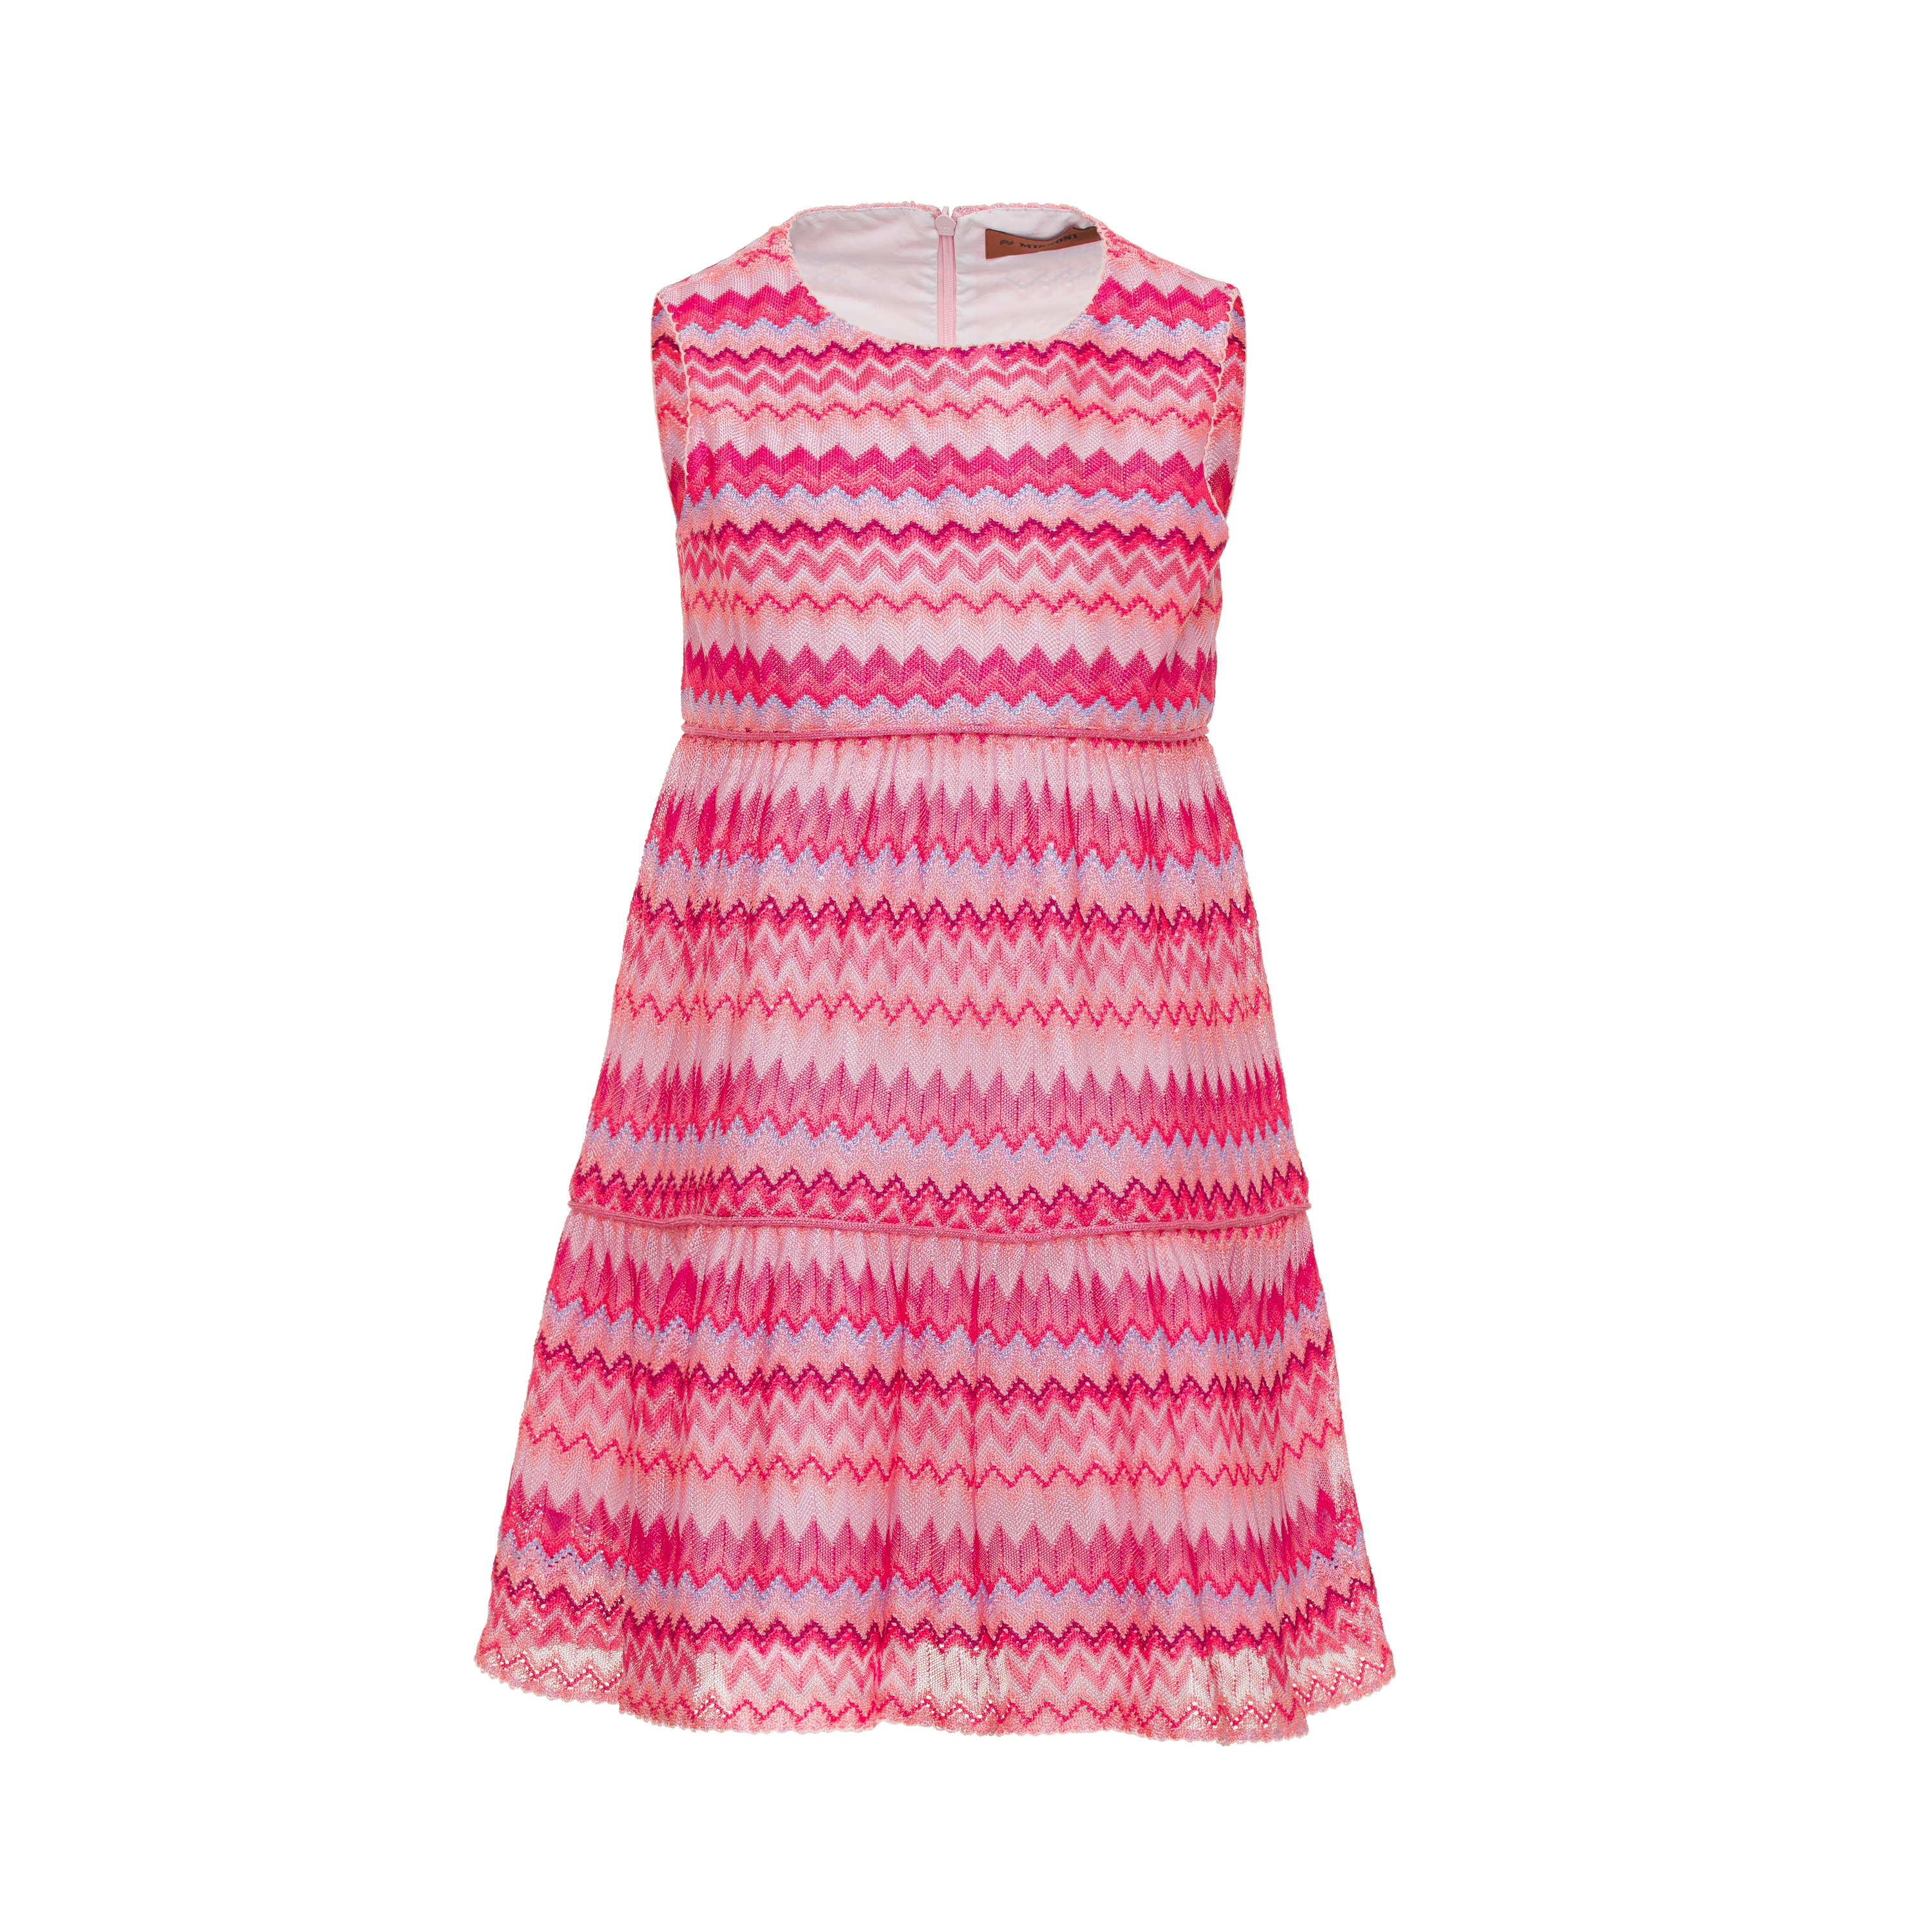 Knit Dress 8 Rosa/fucsia